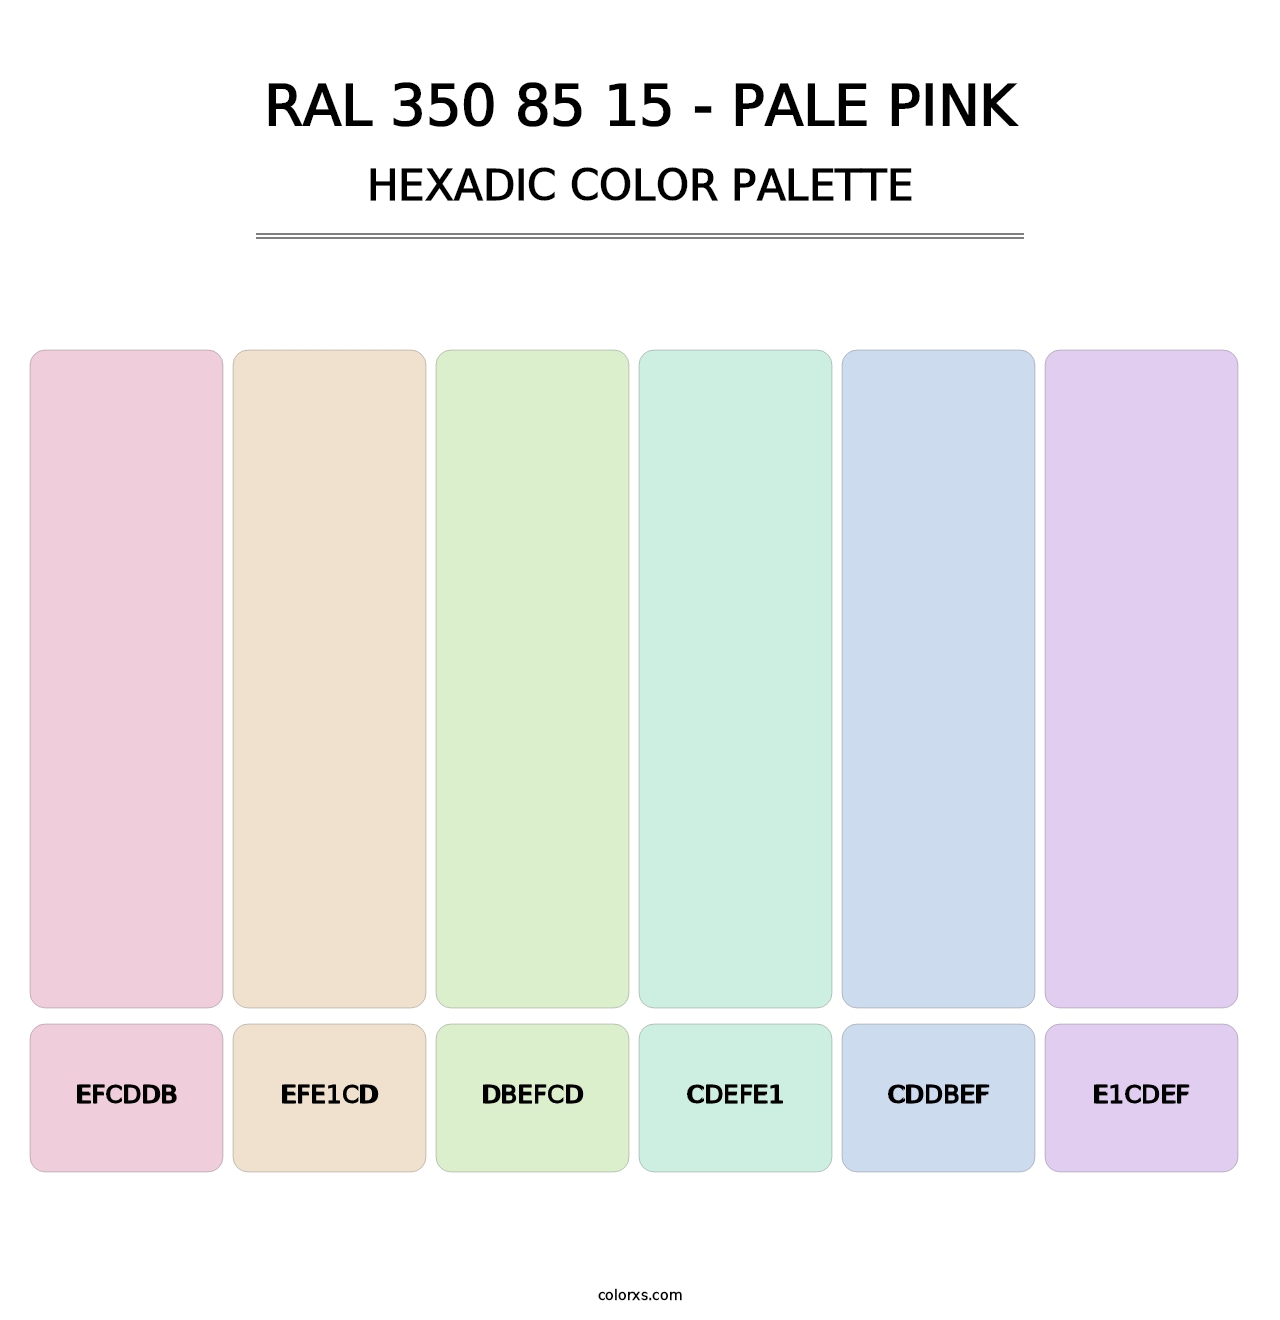 RAL 350 85 15 - Pale Pink - Hexadic Color Palette